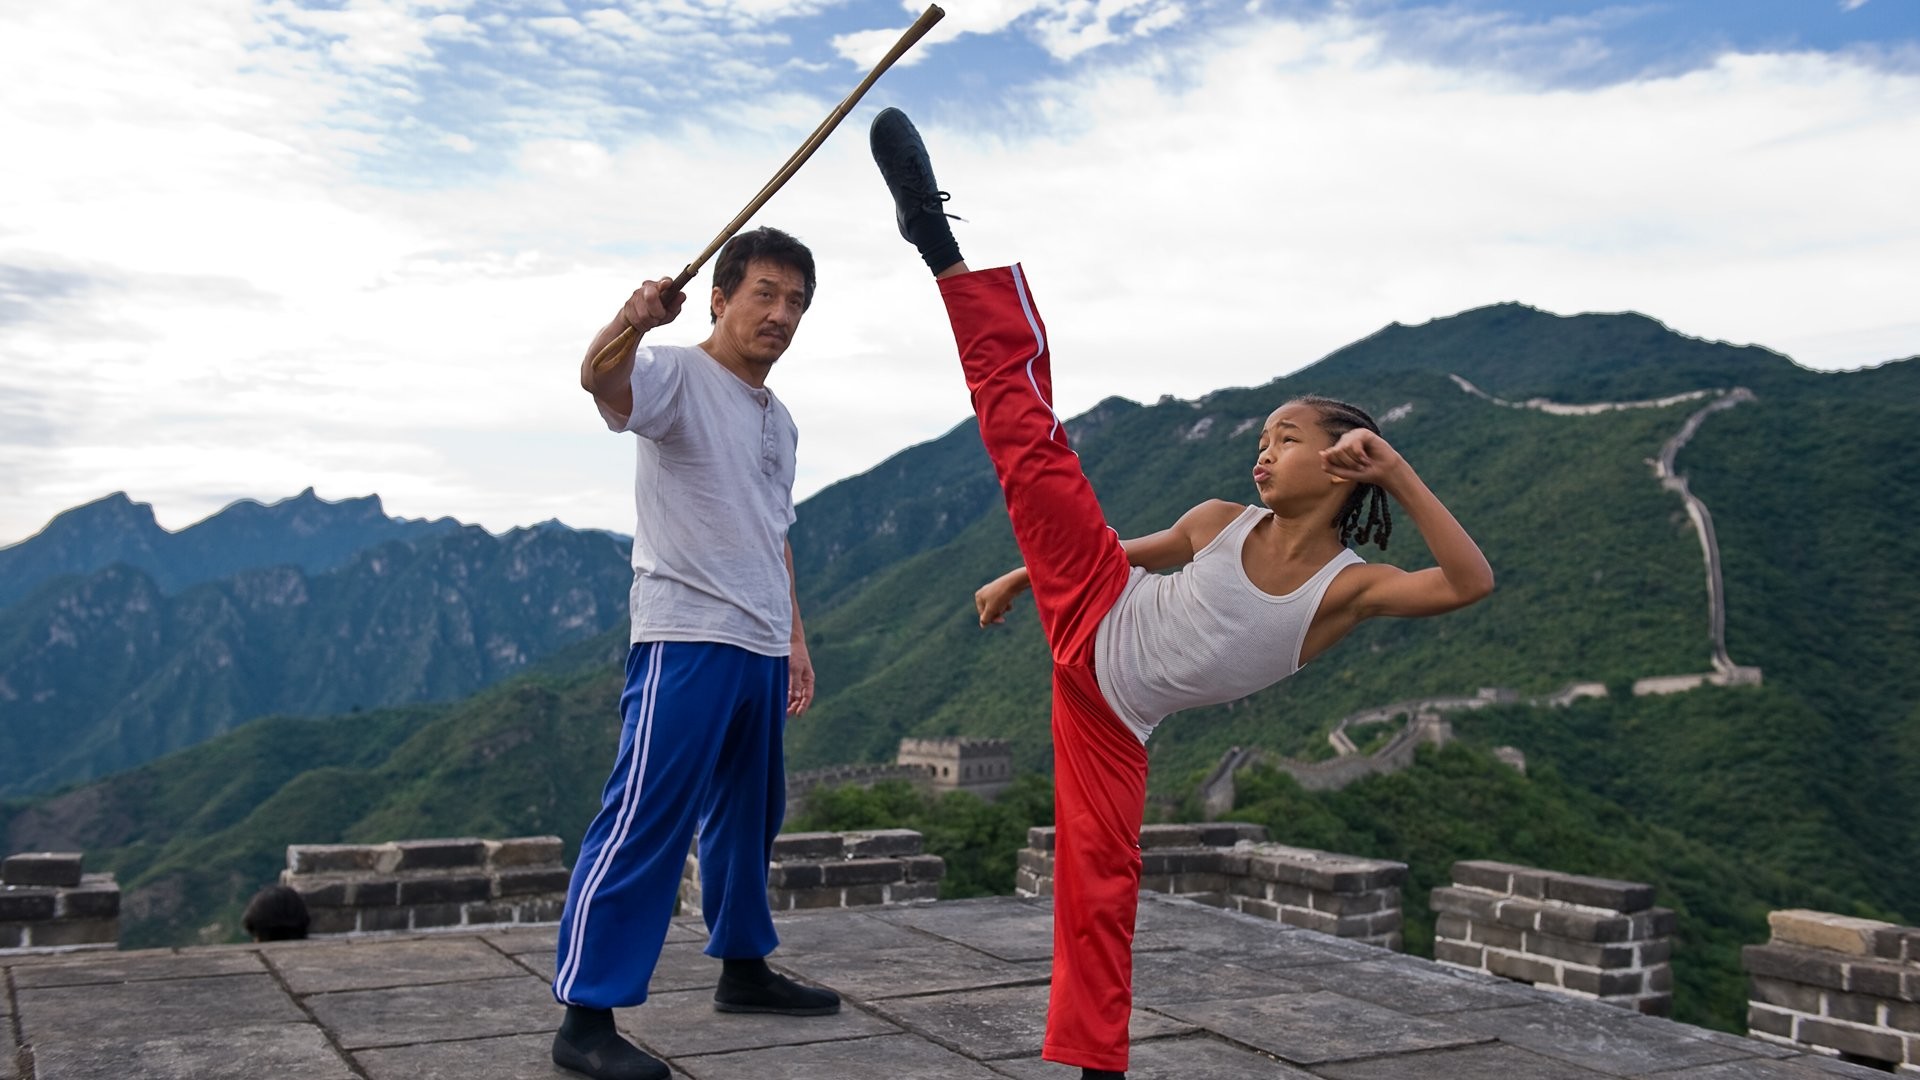 1920x1080 Movie - The Karate Kid (2010) Jackie Chan Jaden Smith Wallpaper